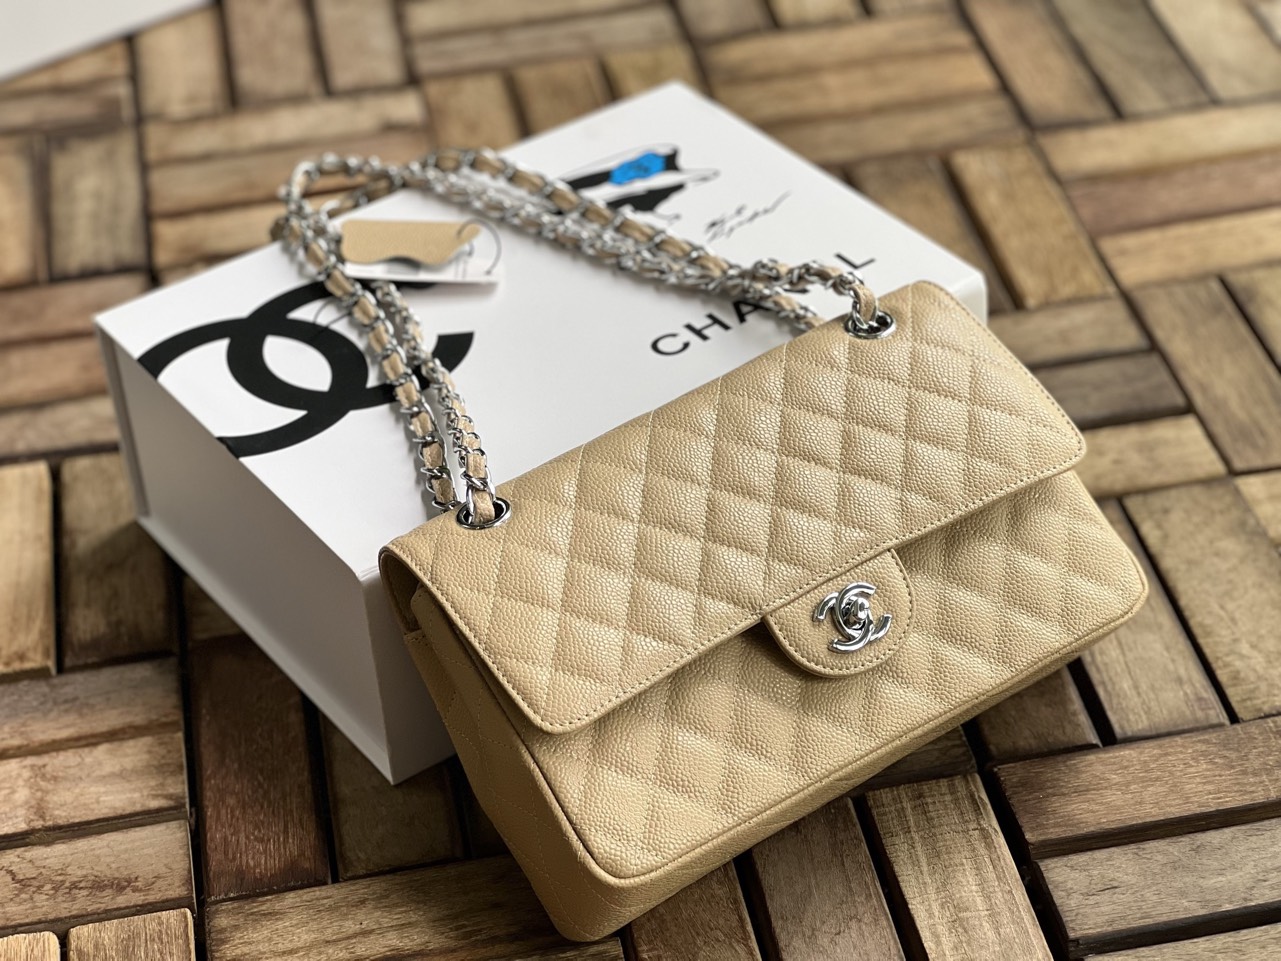 現貨 Chanel Classic Flap Bag 20cm Navy  Beauti360 全球名店代購 Facebook